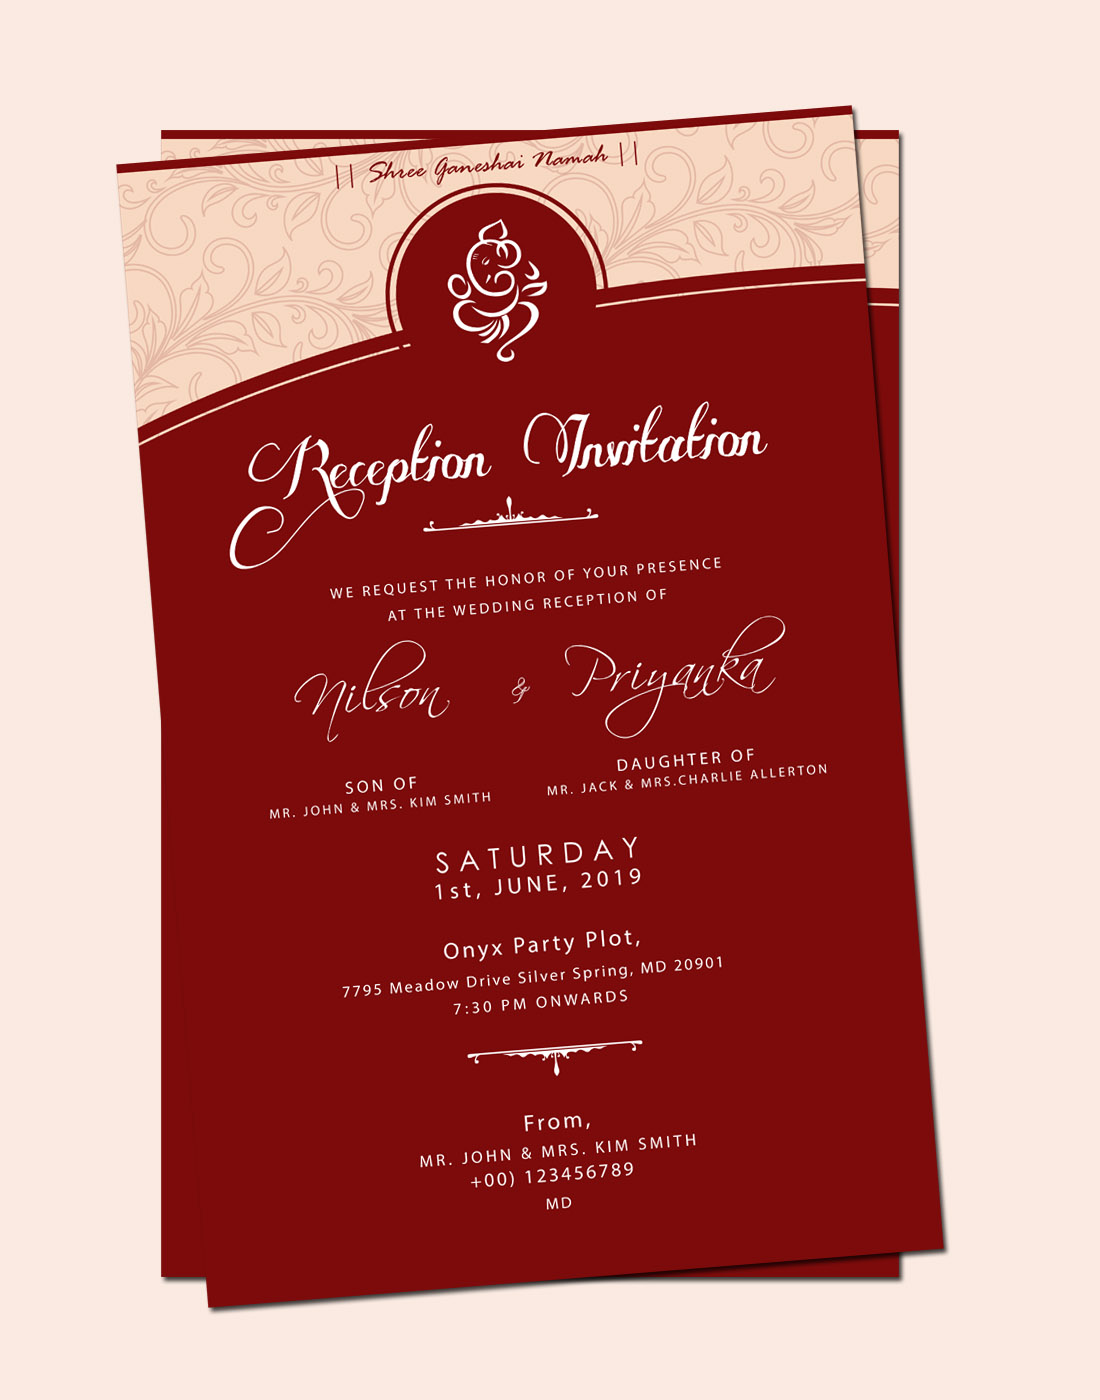 wedding-reception-cards